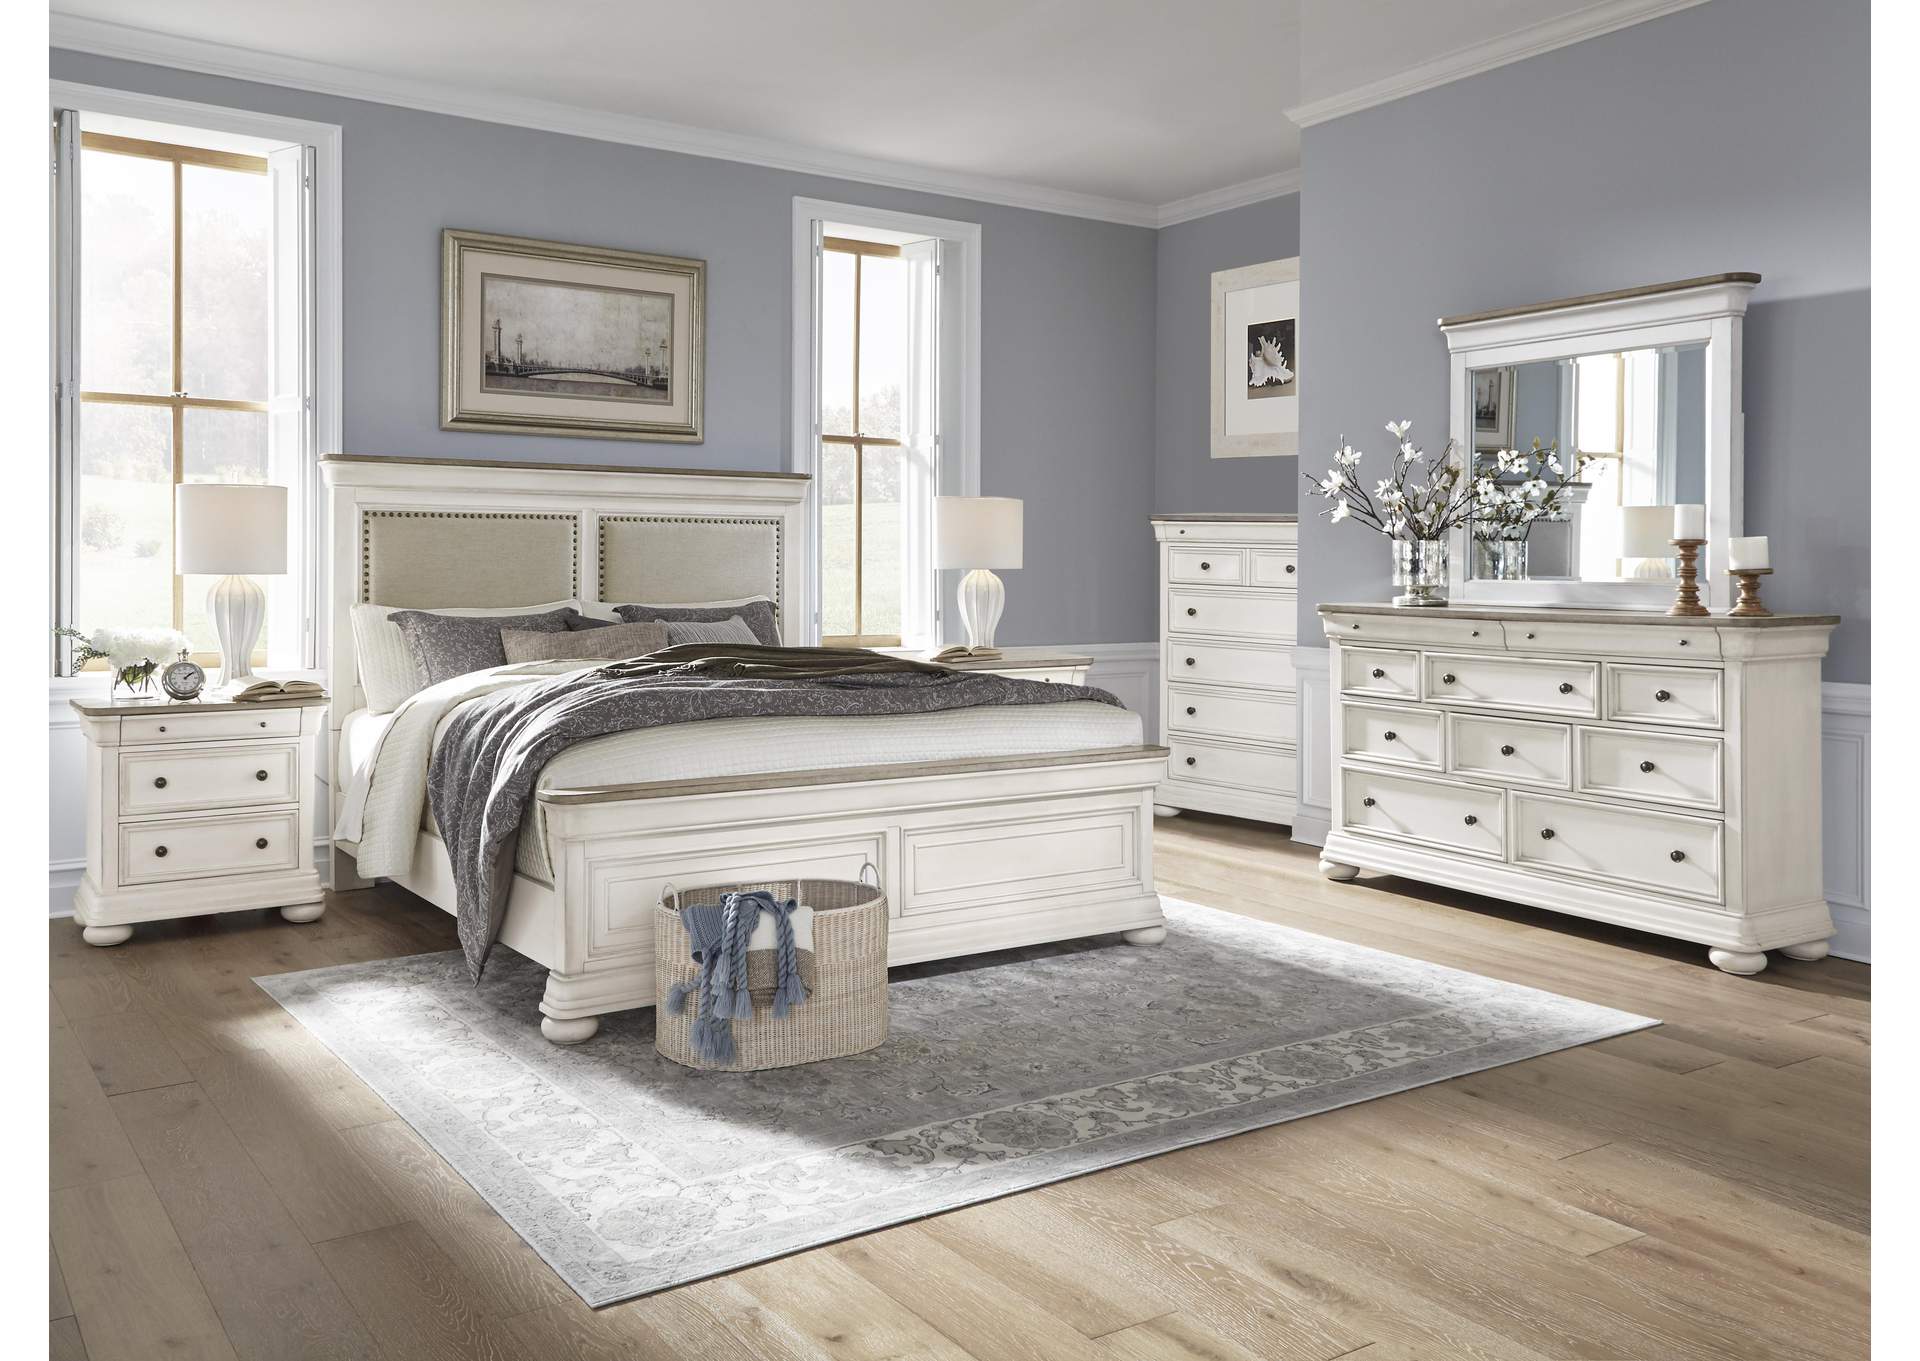 6 Piece Queen Bedroom Set - White,Pulaski Furniture